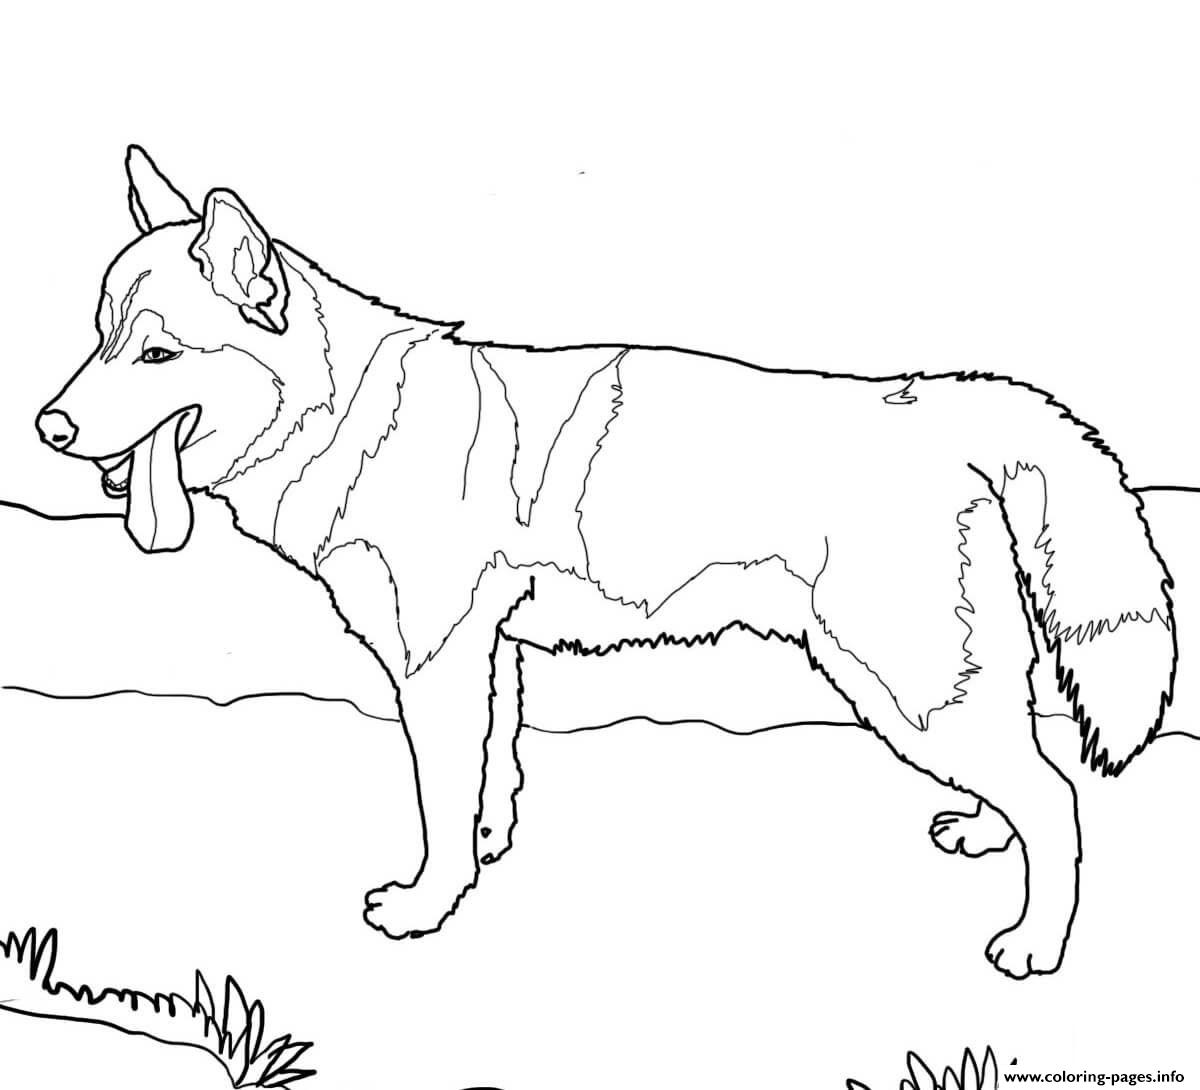 Siberian Husky Dog coloring